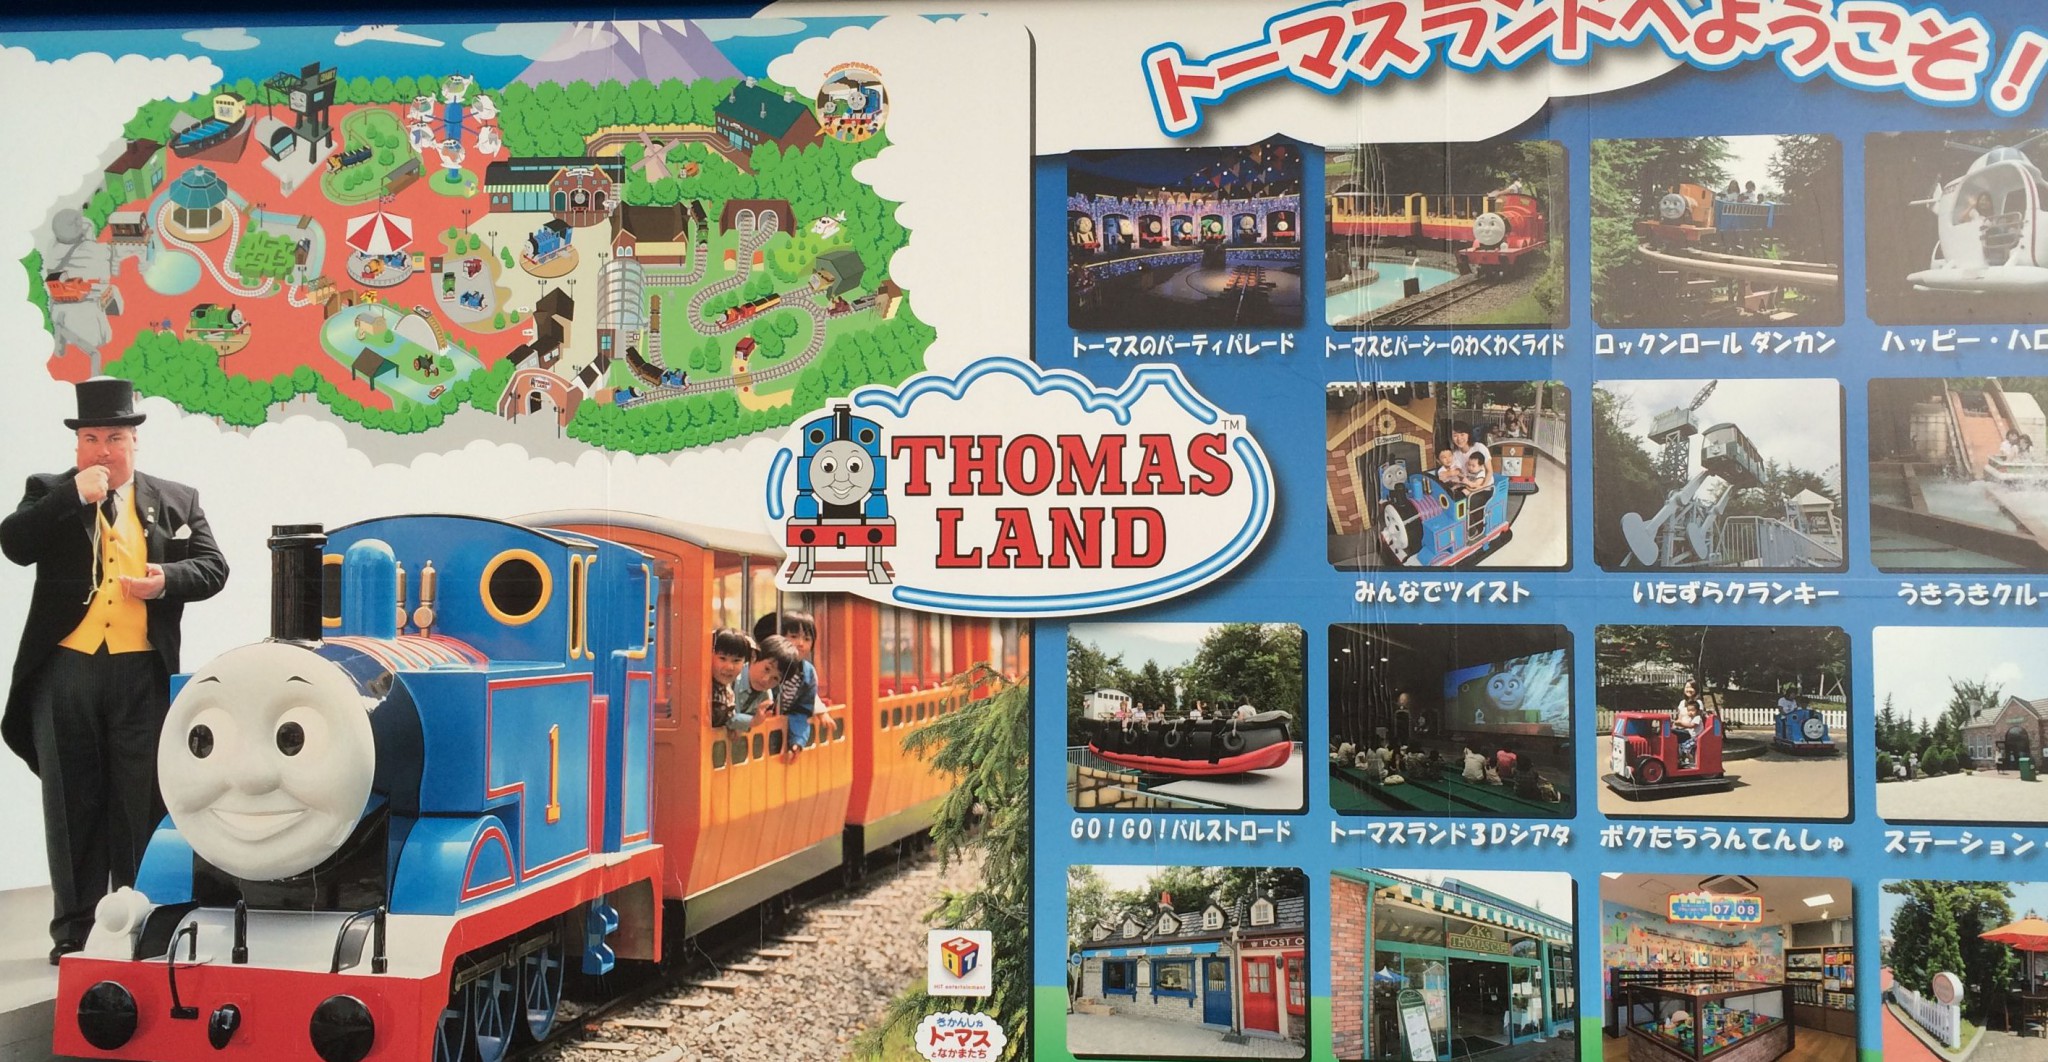 Thomas Land at Fuji-Q Highland, Yamanashi Japan